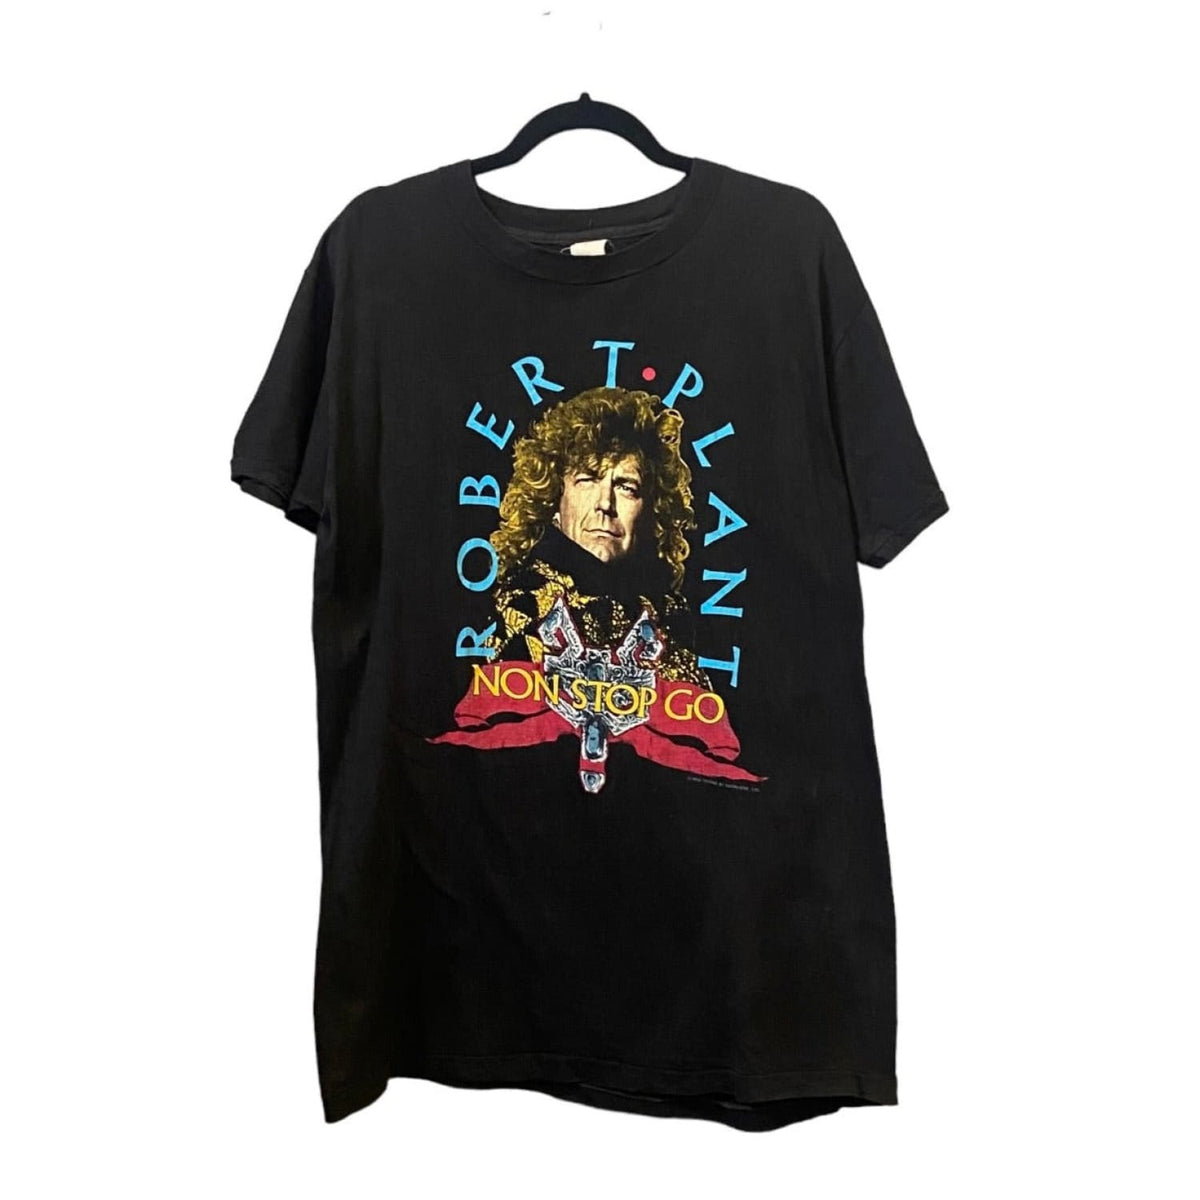 Vintage Robert Plant Non Stop Go Tour Shirt Earthday -